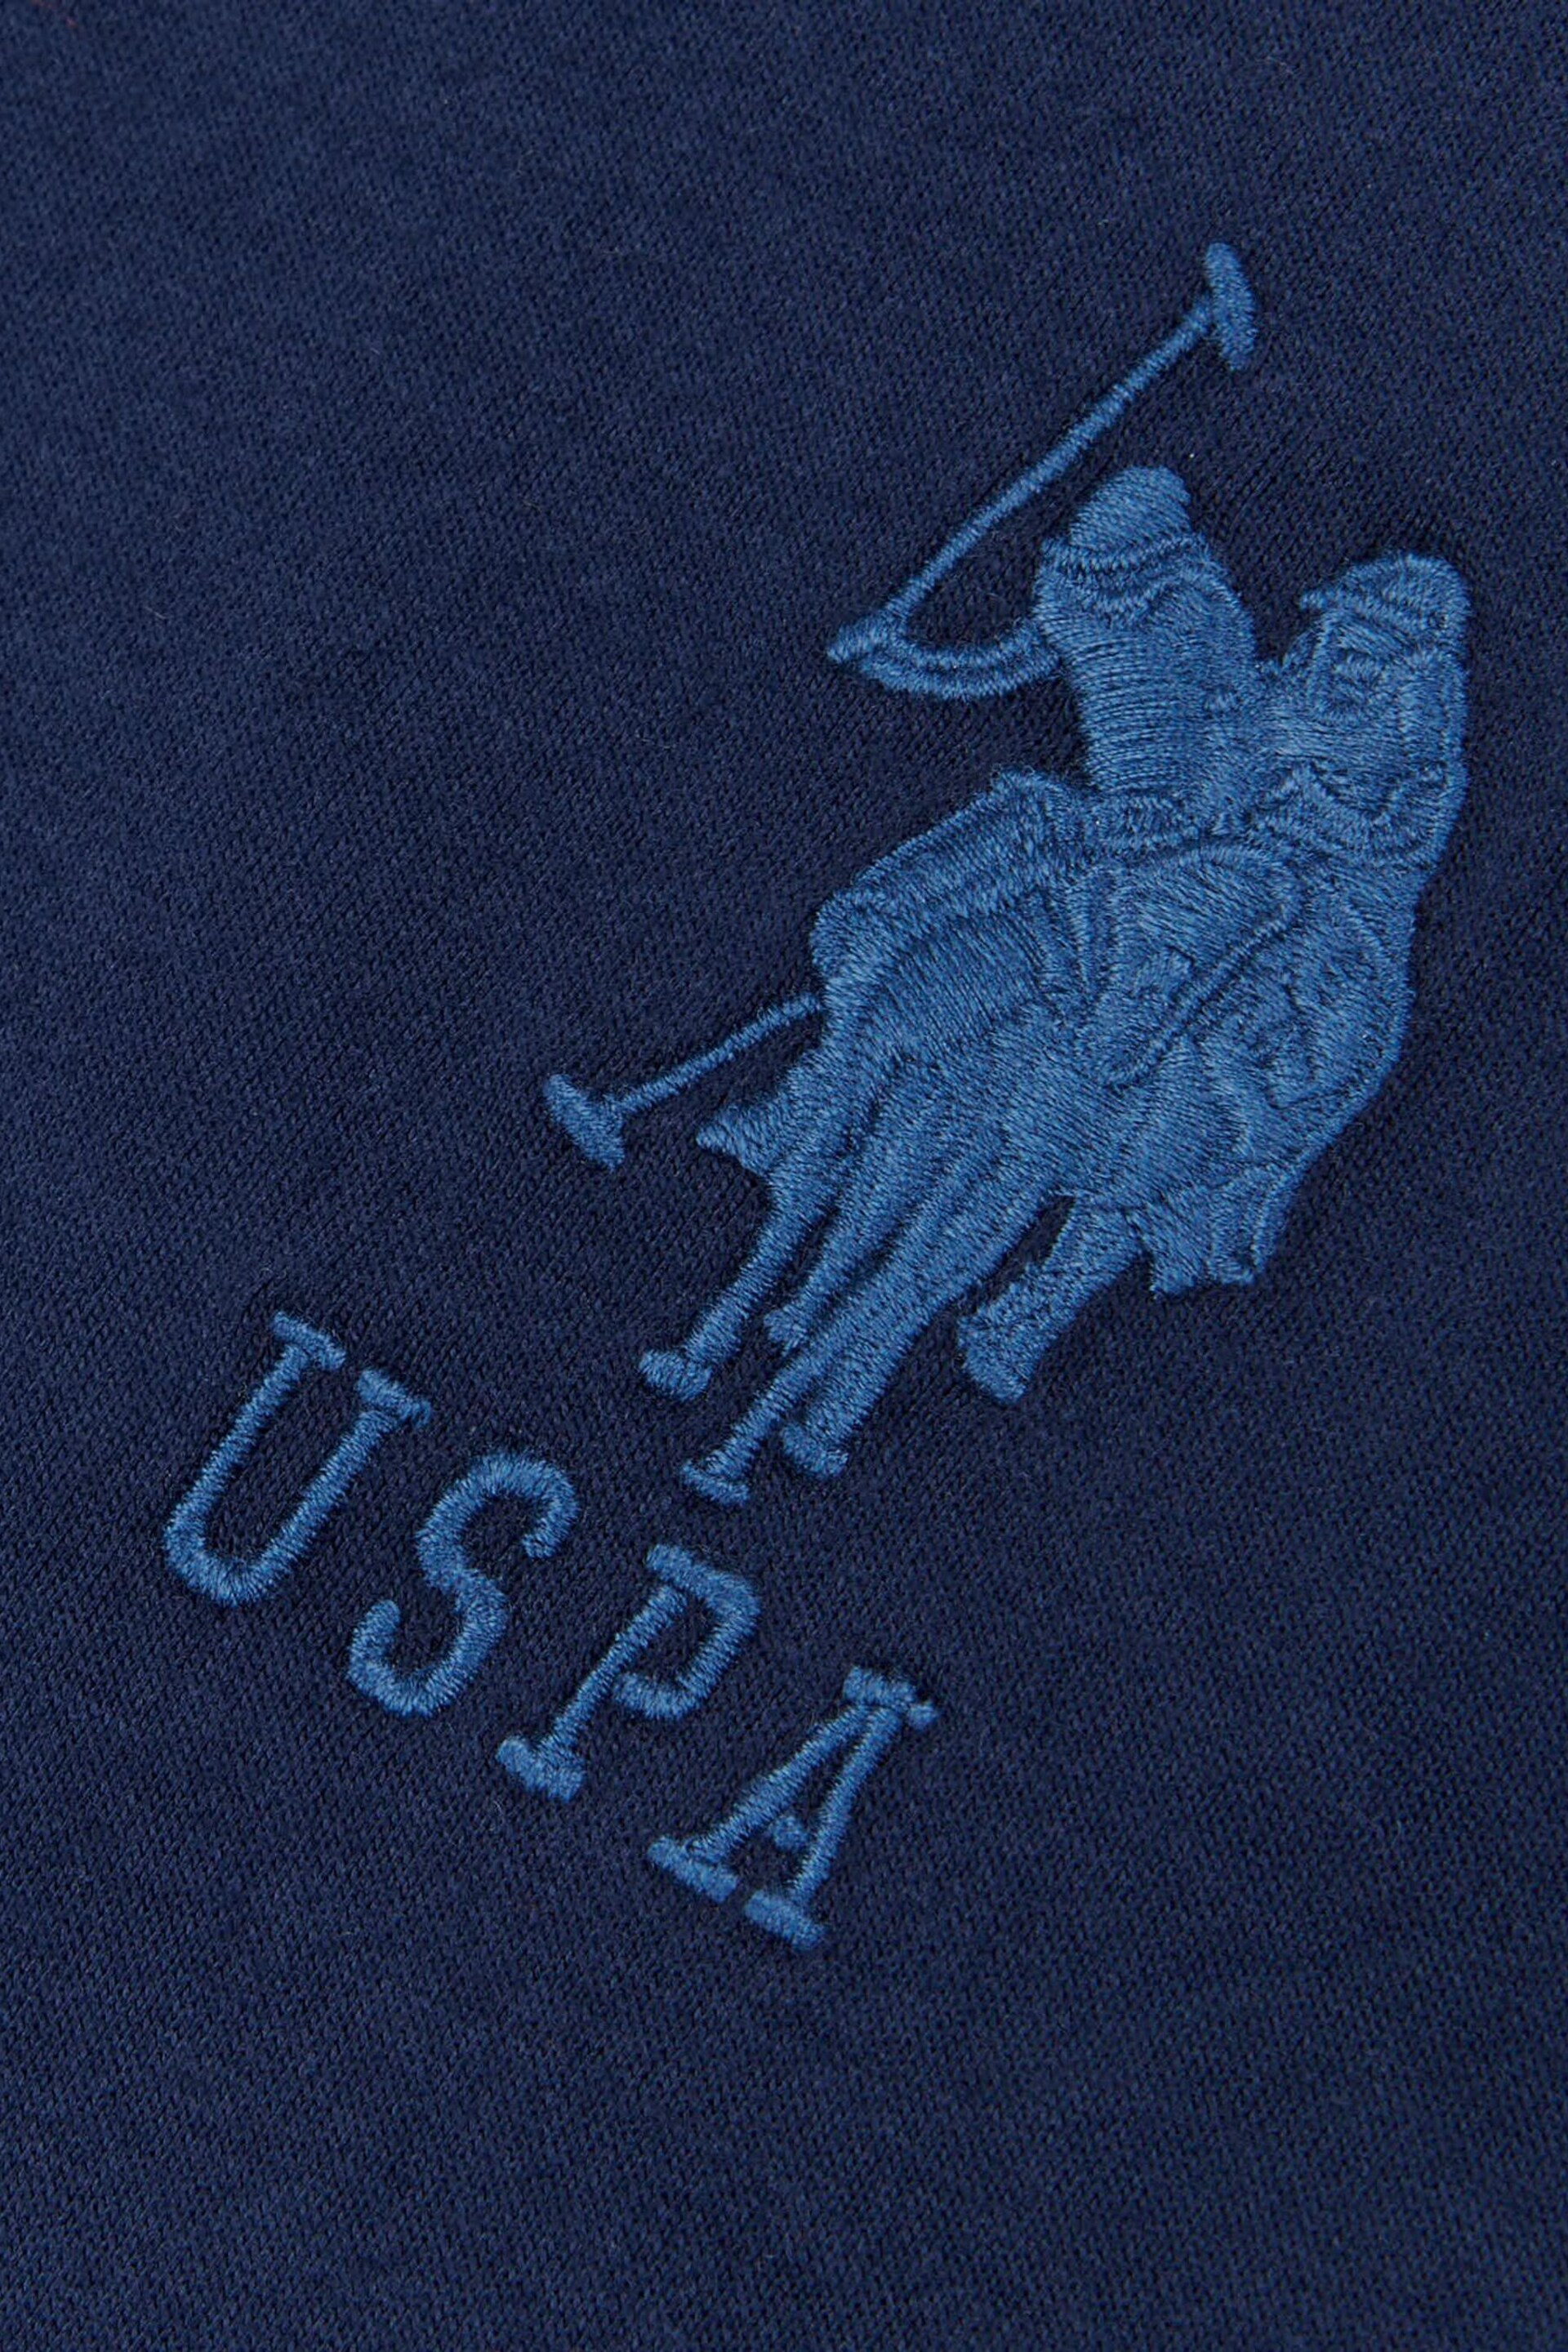 U.S. Polo Assn. Mens Big & Tall Player 3 Logo T-Shirt - Image 6 of 6